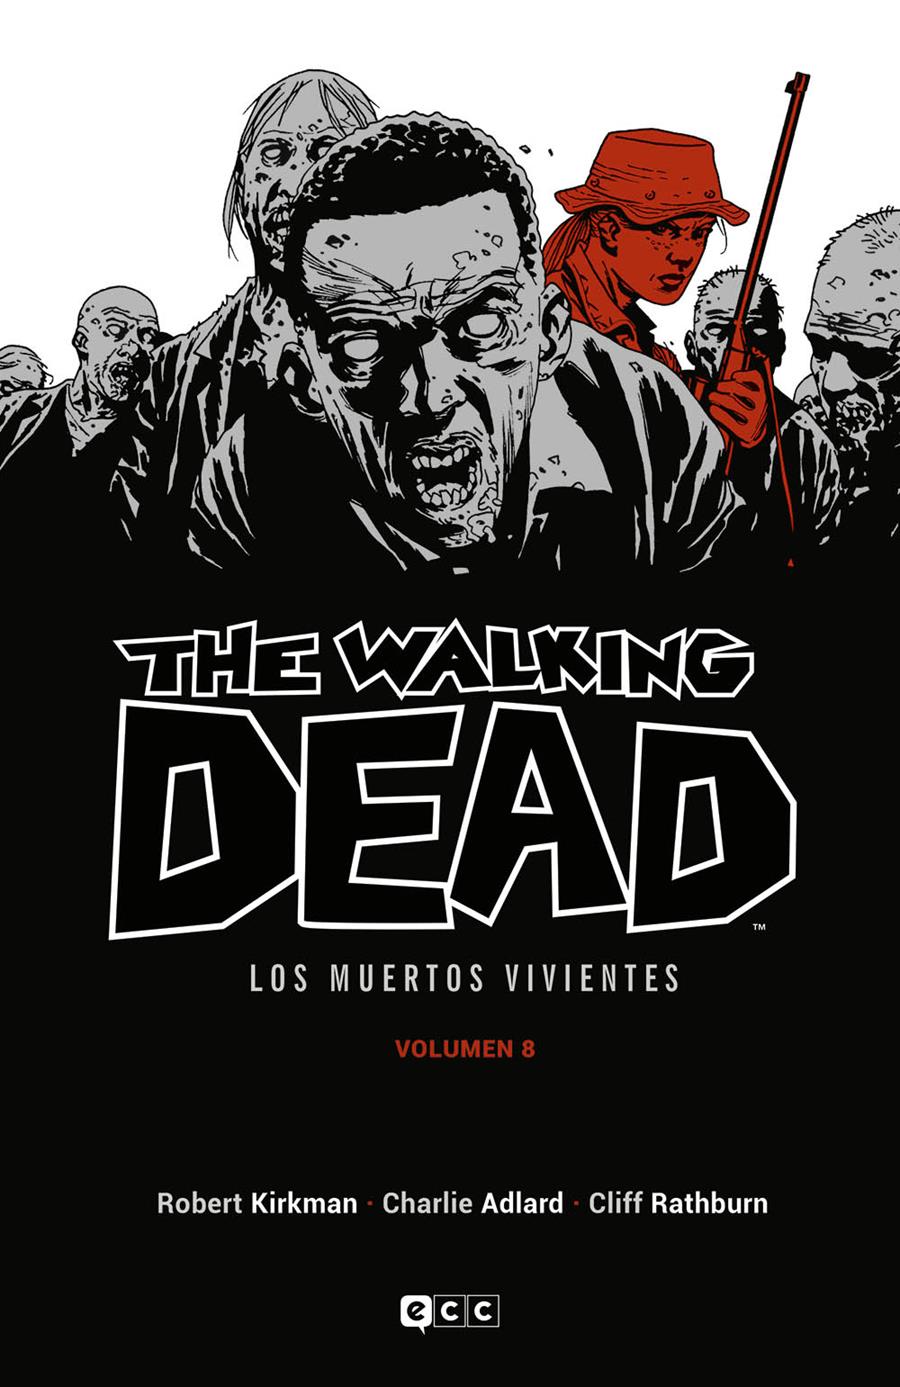 The Walking Dead (Los muertos vivientes) vol. 08 de 16 | N0322-ECC52 | Charlie Adlard / Robert Kirkman | Terra de Còmic - Tu tienda de cómics online especializada en cómics, manga y merchandising